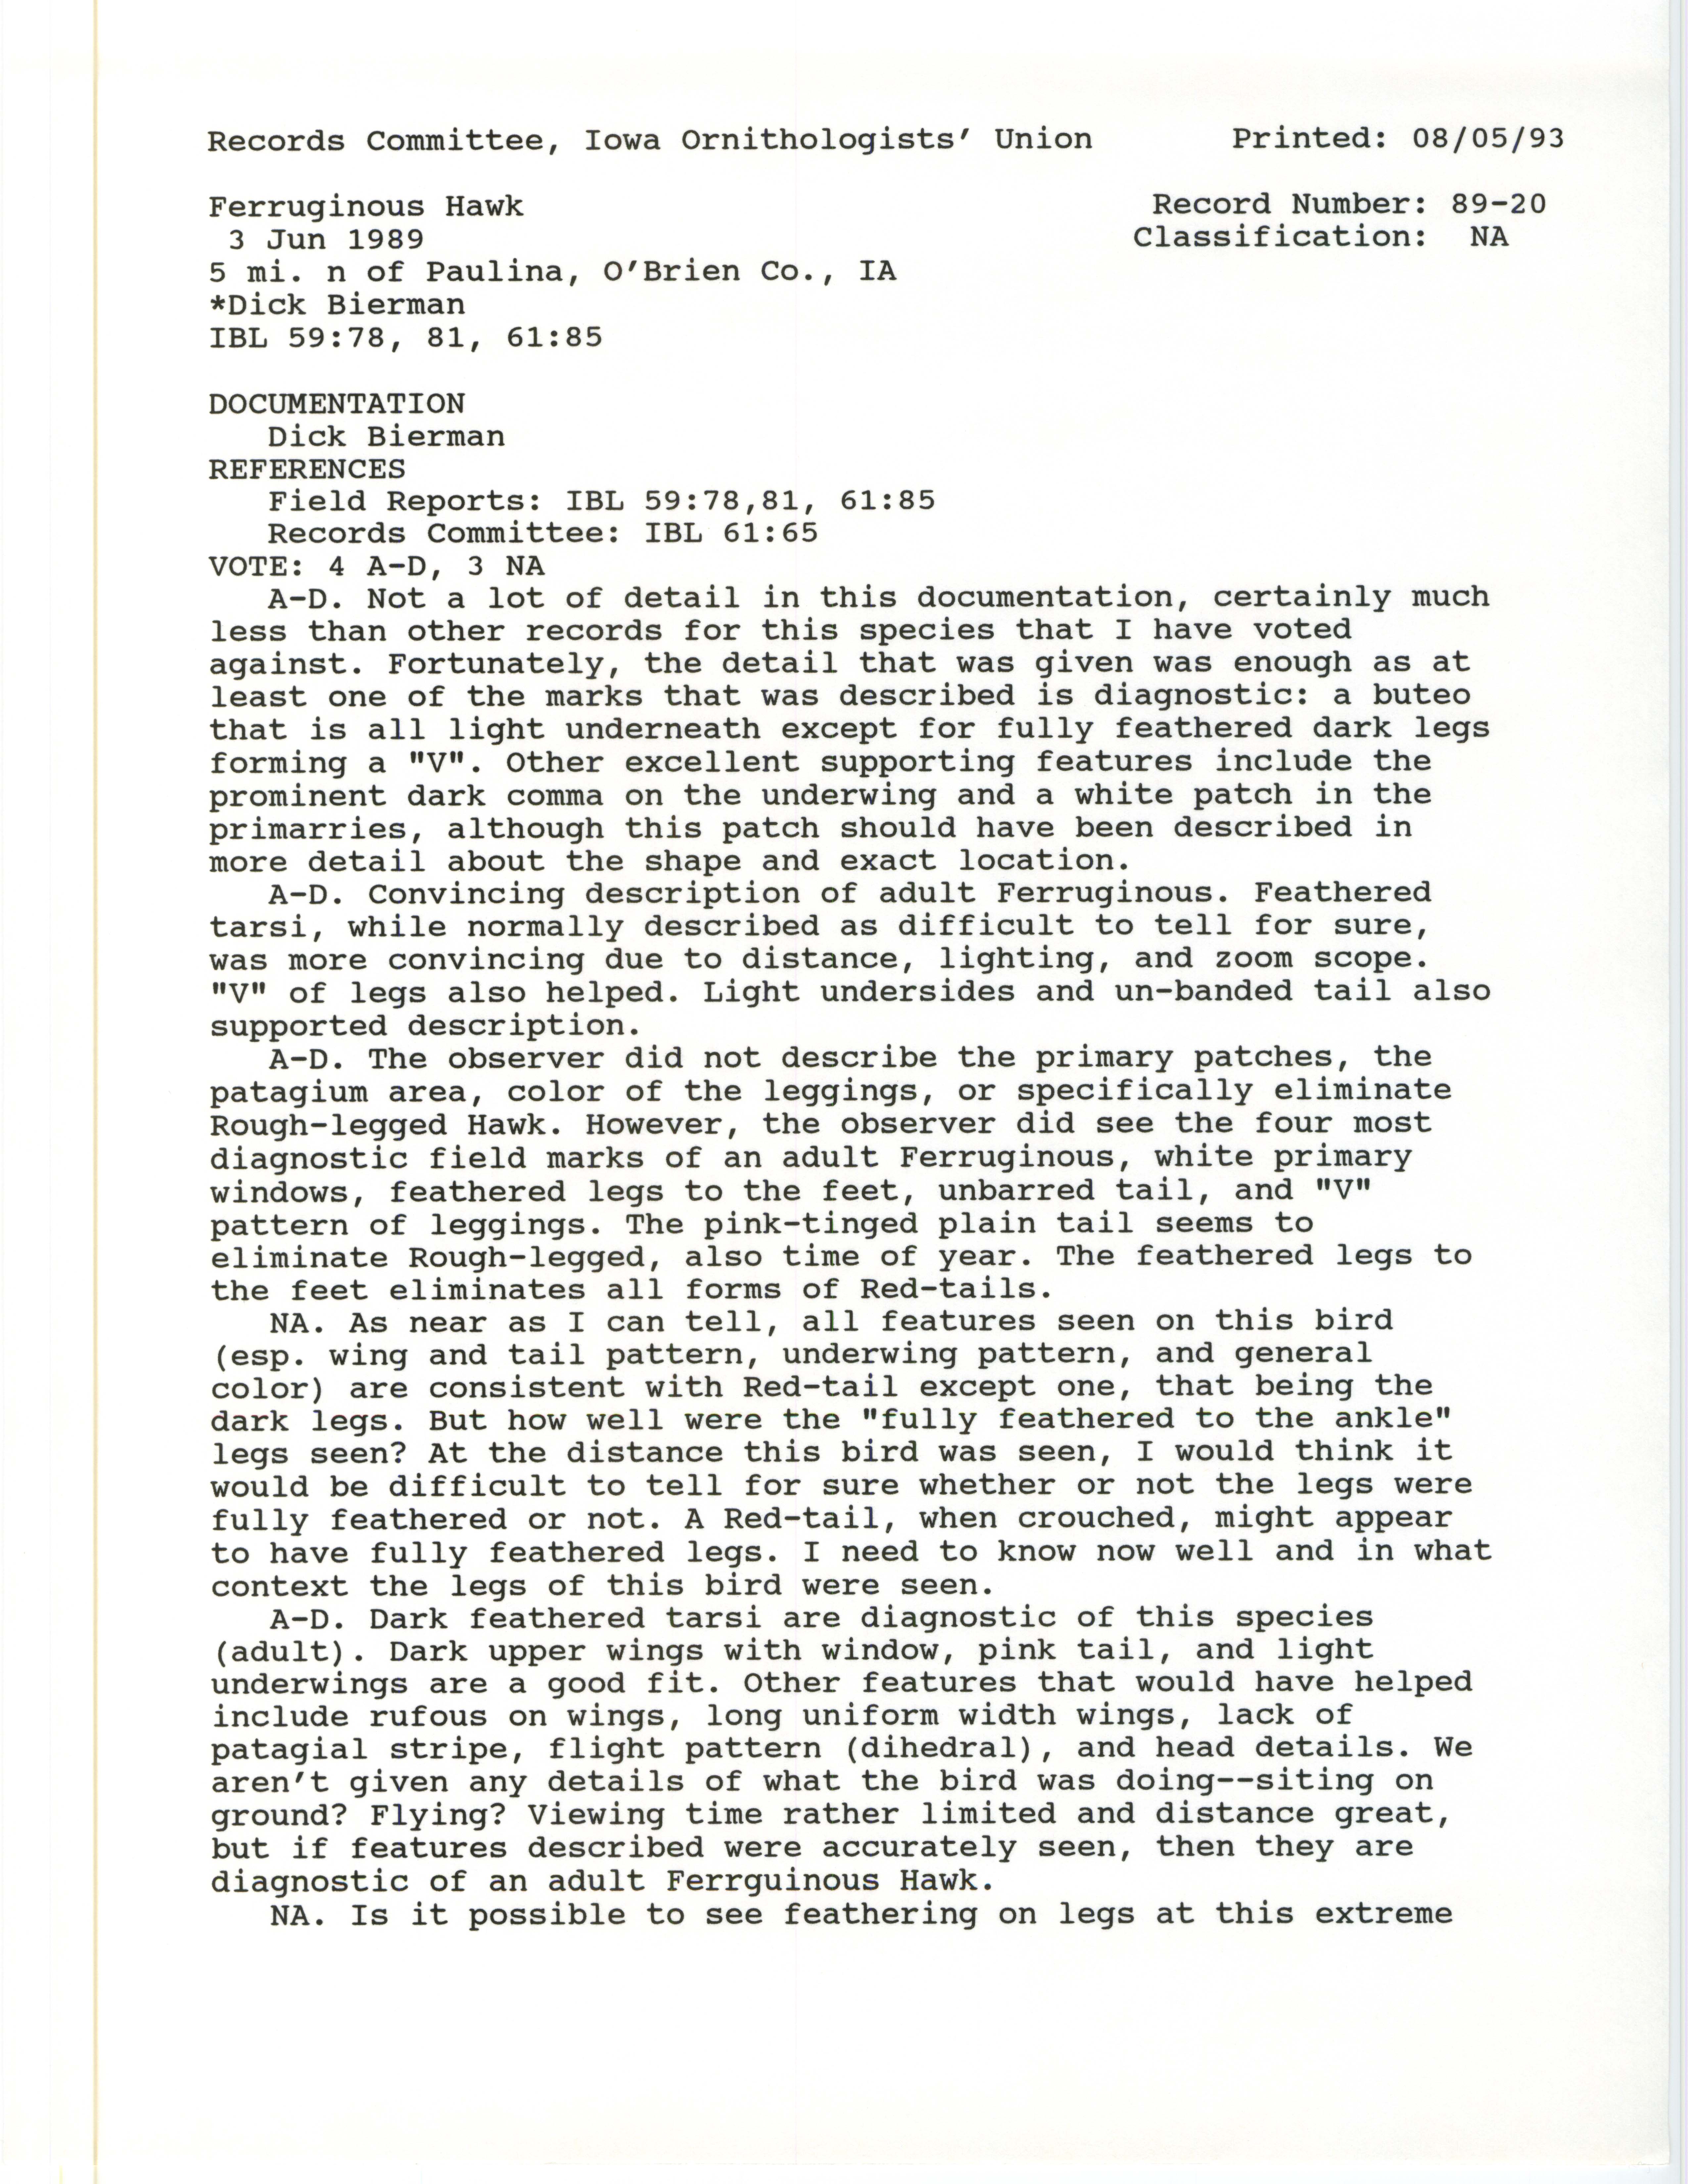 Records Committee review for rare bird sighting of Ferruginous Hawk at Paulina, 1989